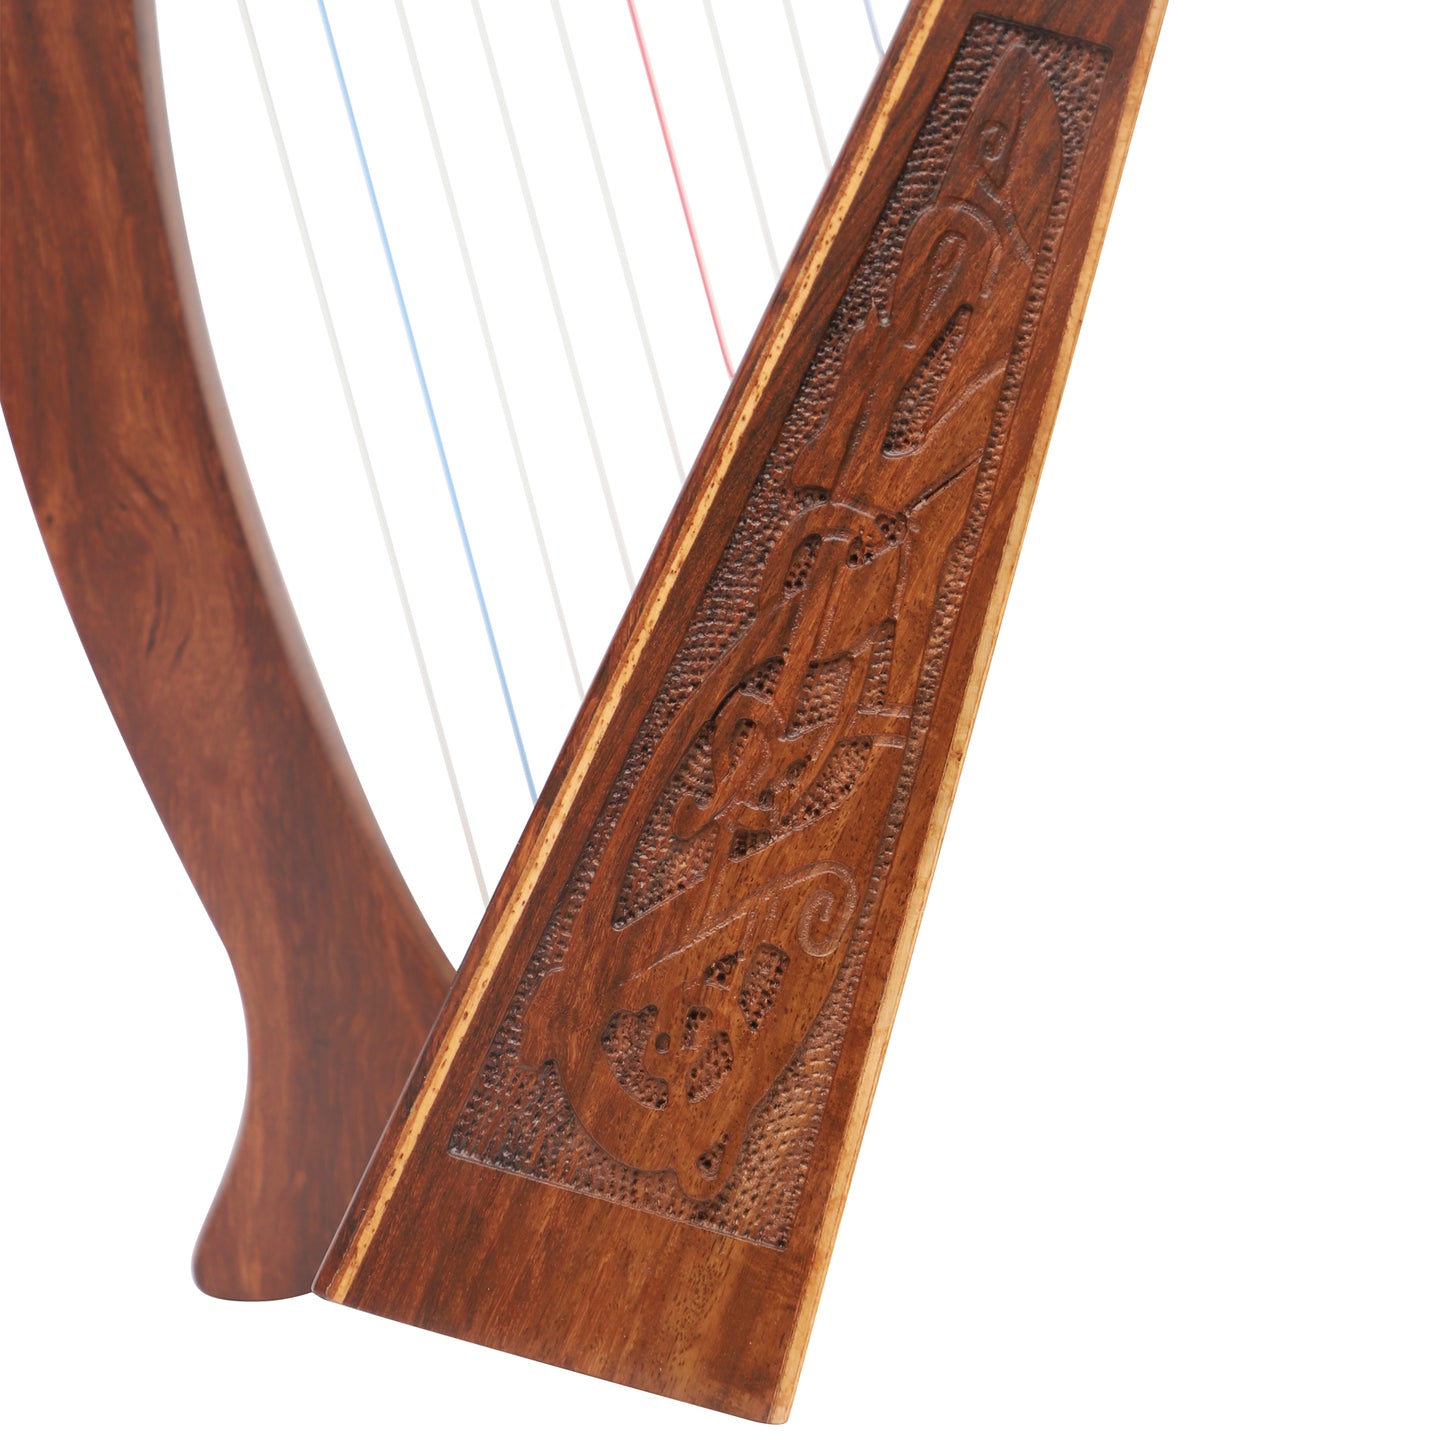 Muzikkon O'Carolan Harp, 9 Strings Rosewood Celtic Dragon Muzikkon